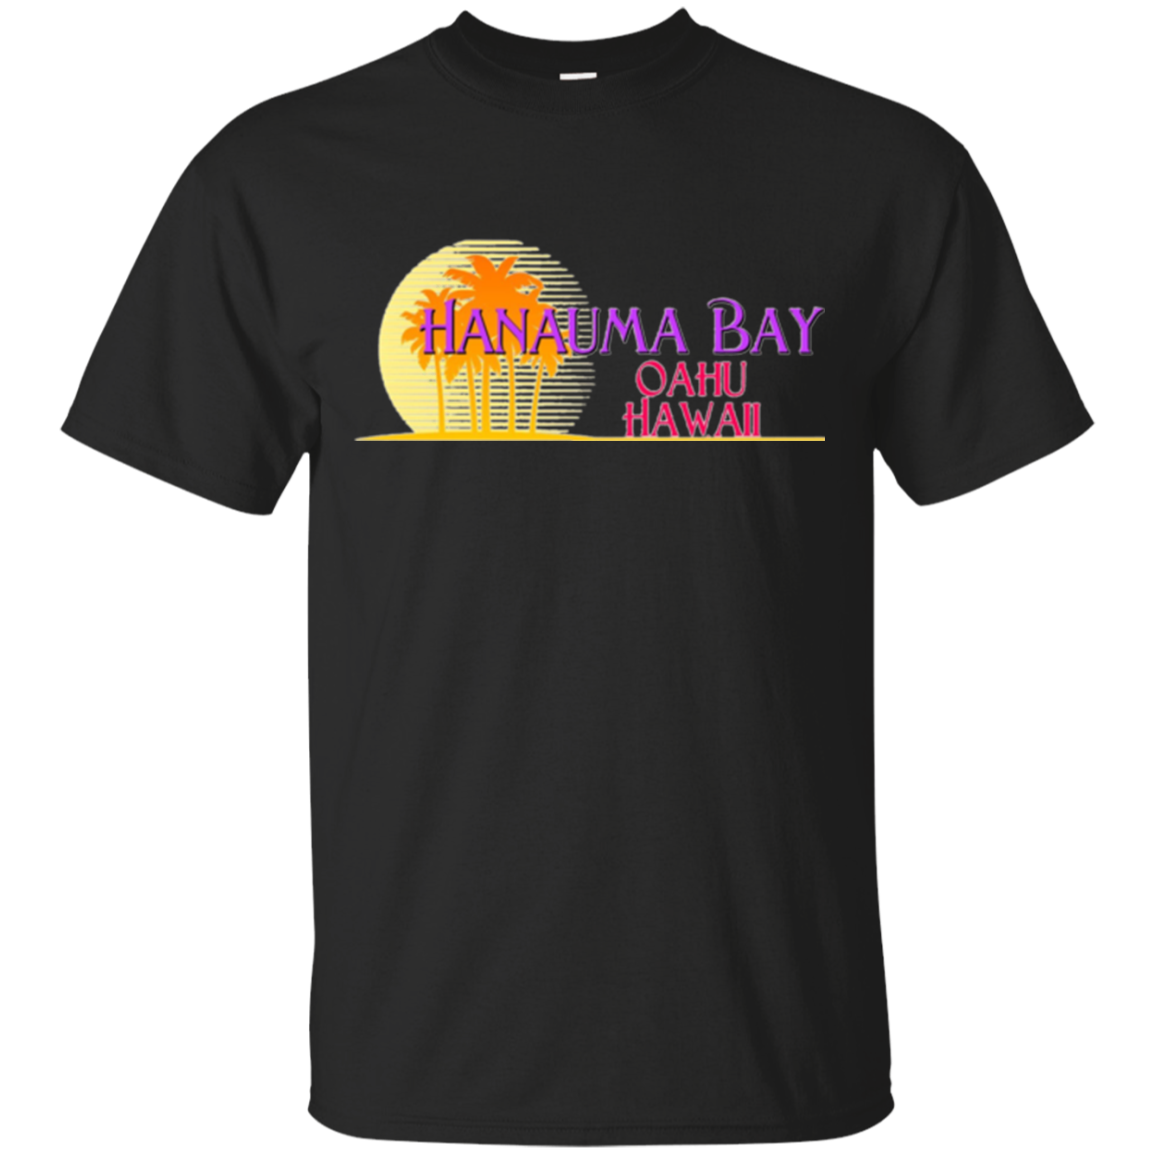 Hanauma Bay, Oahu, Hawaii Shirts